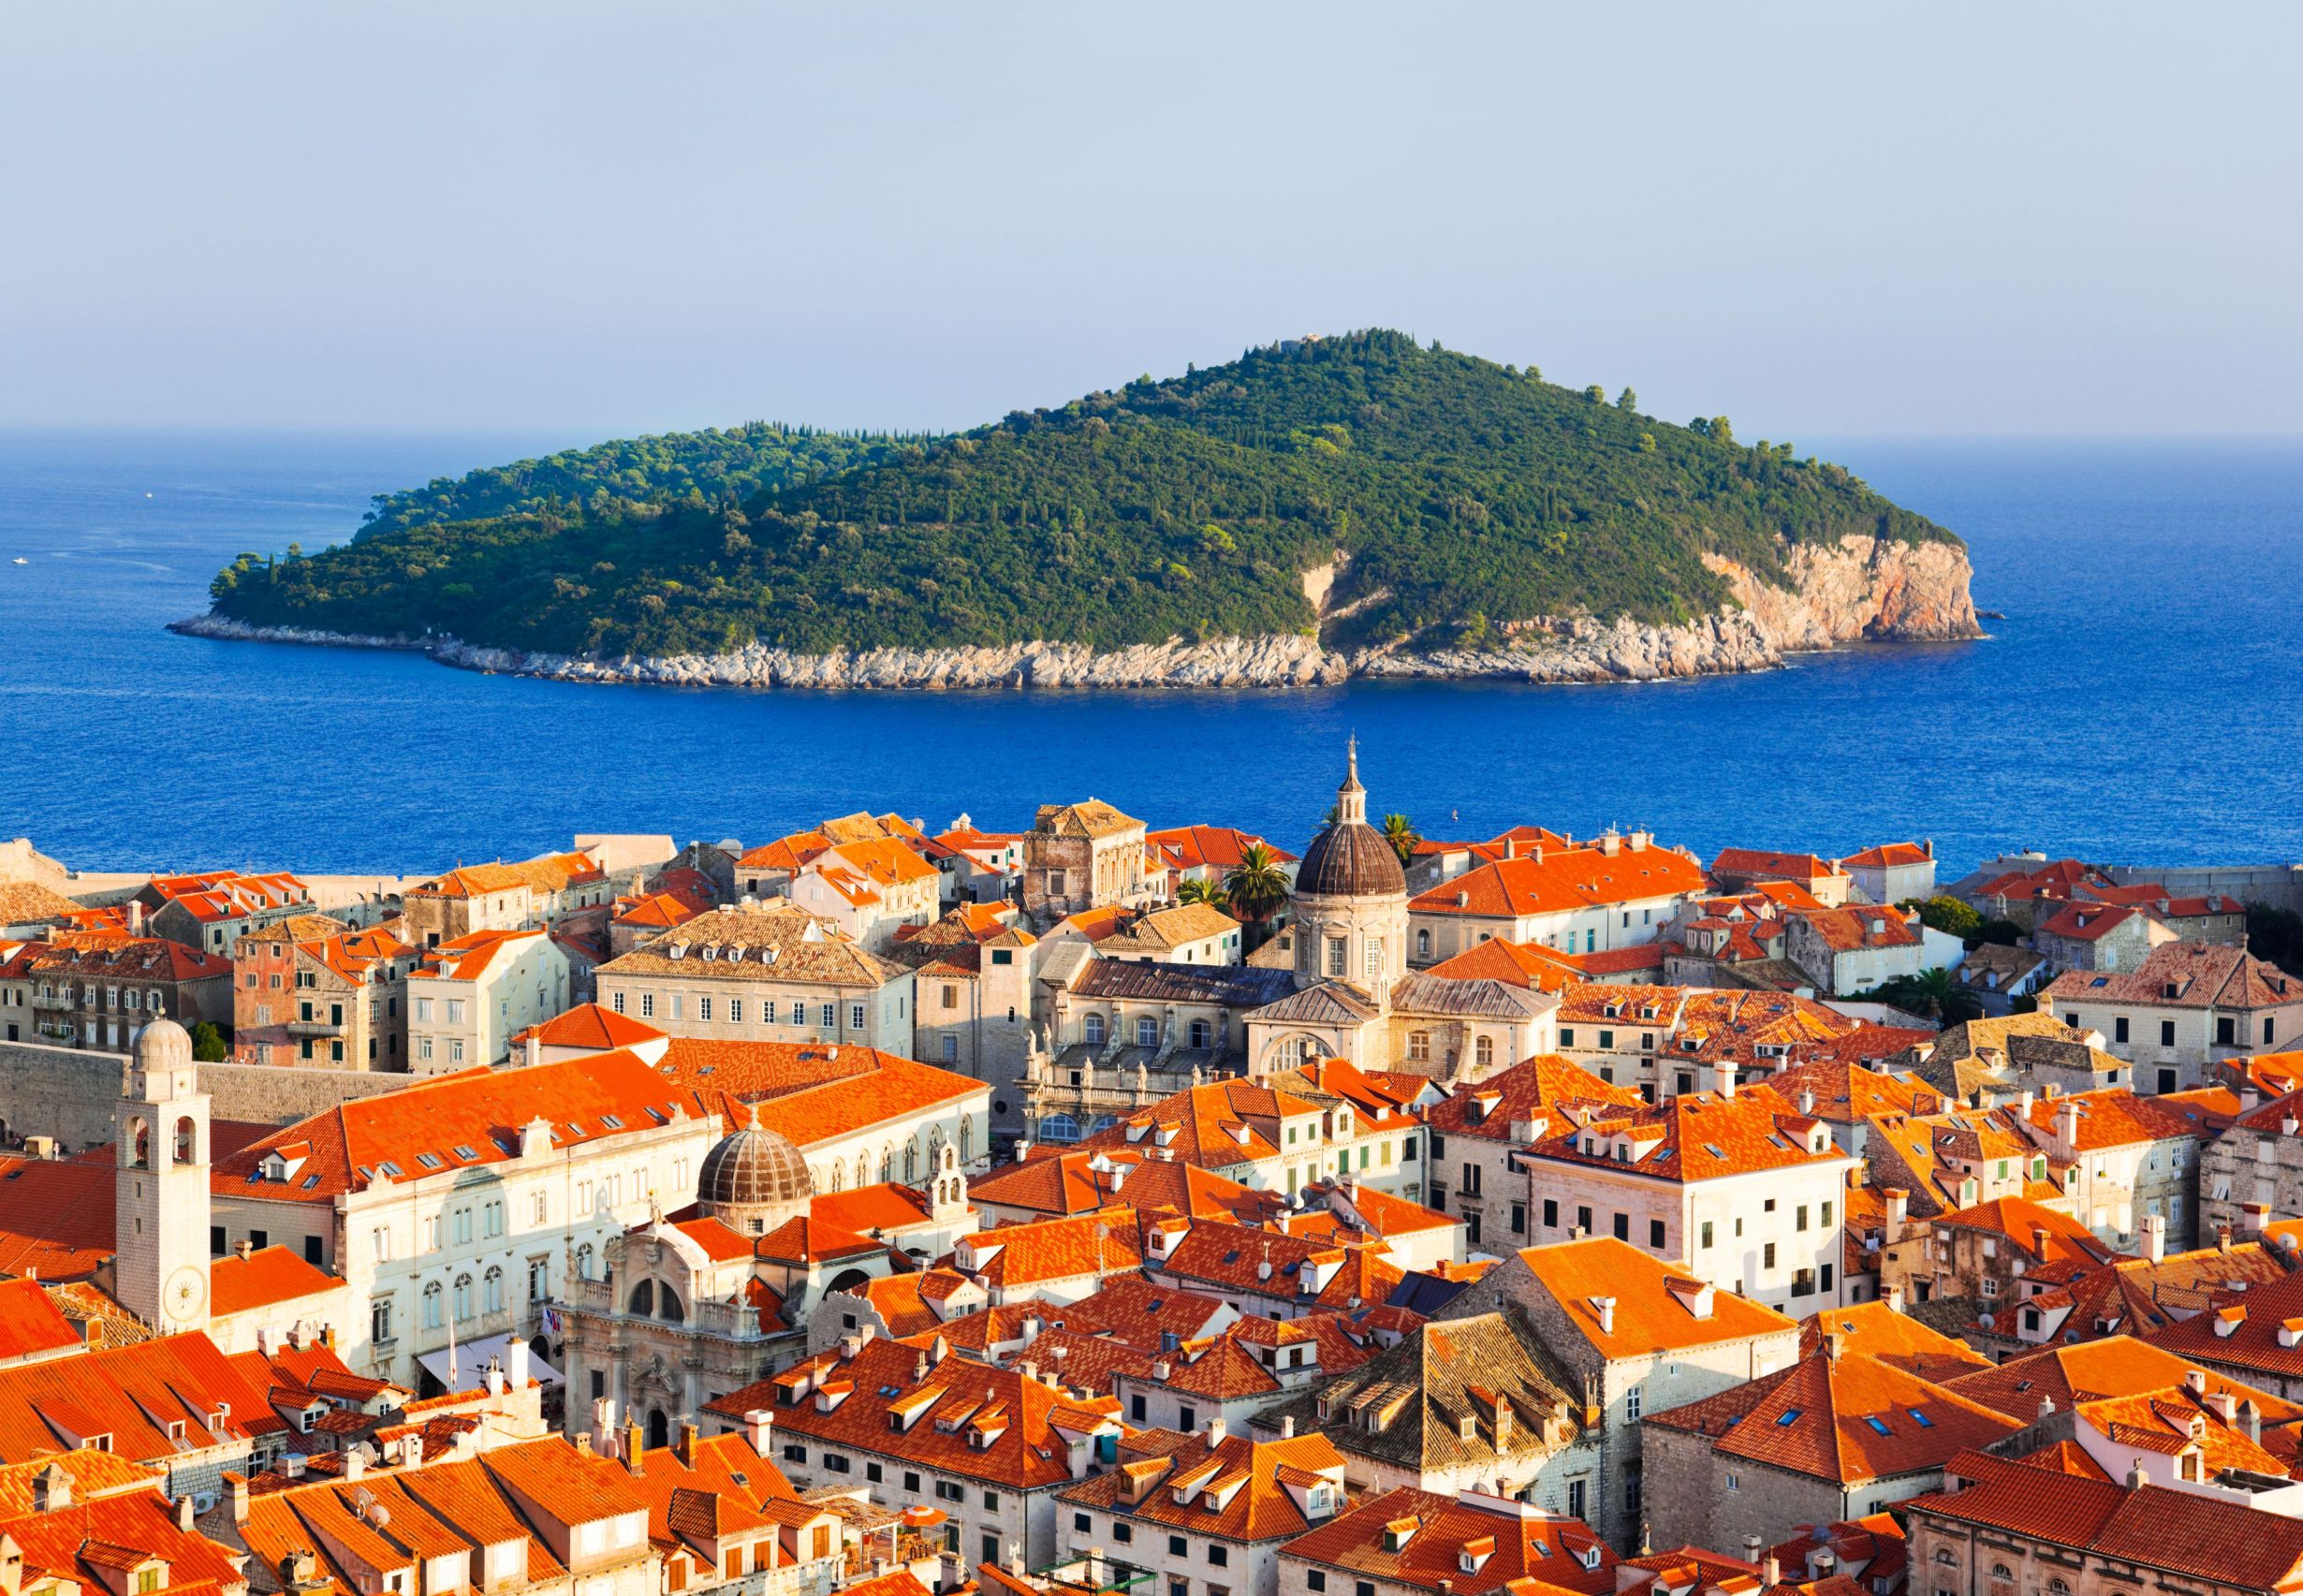 "Dubrovnik"